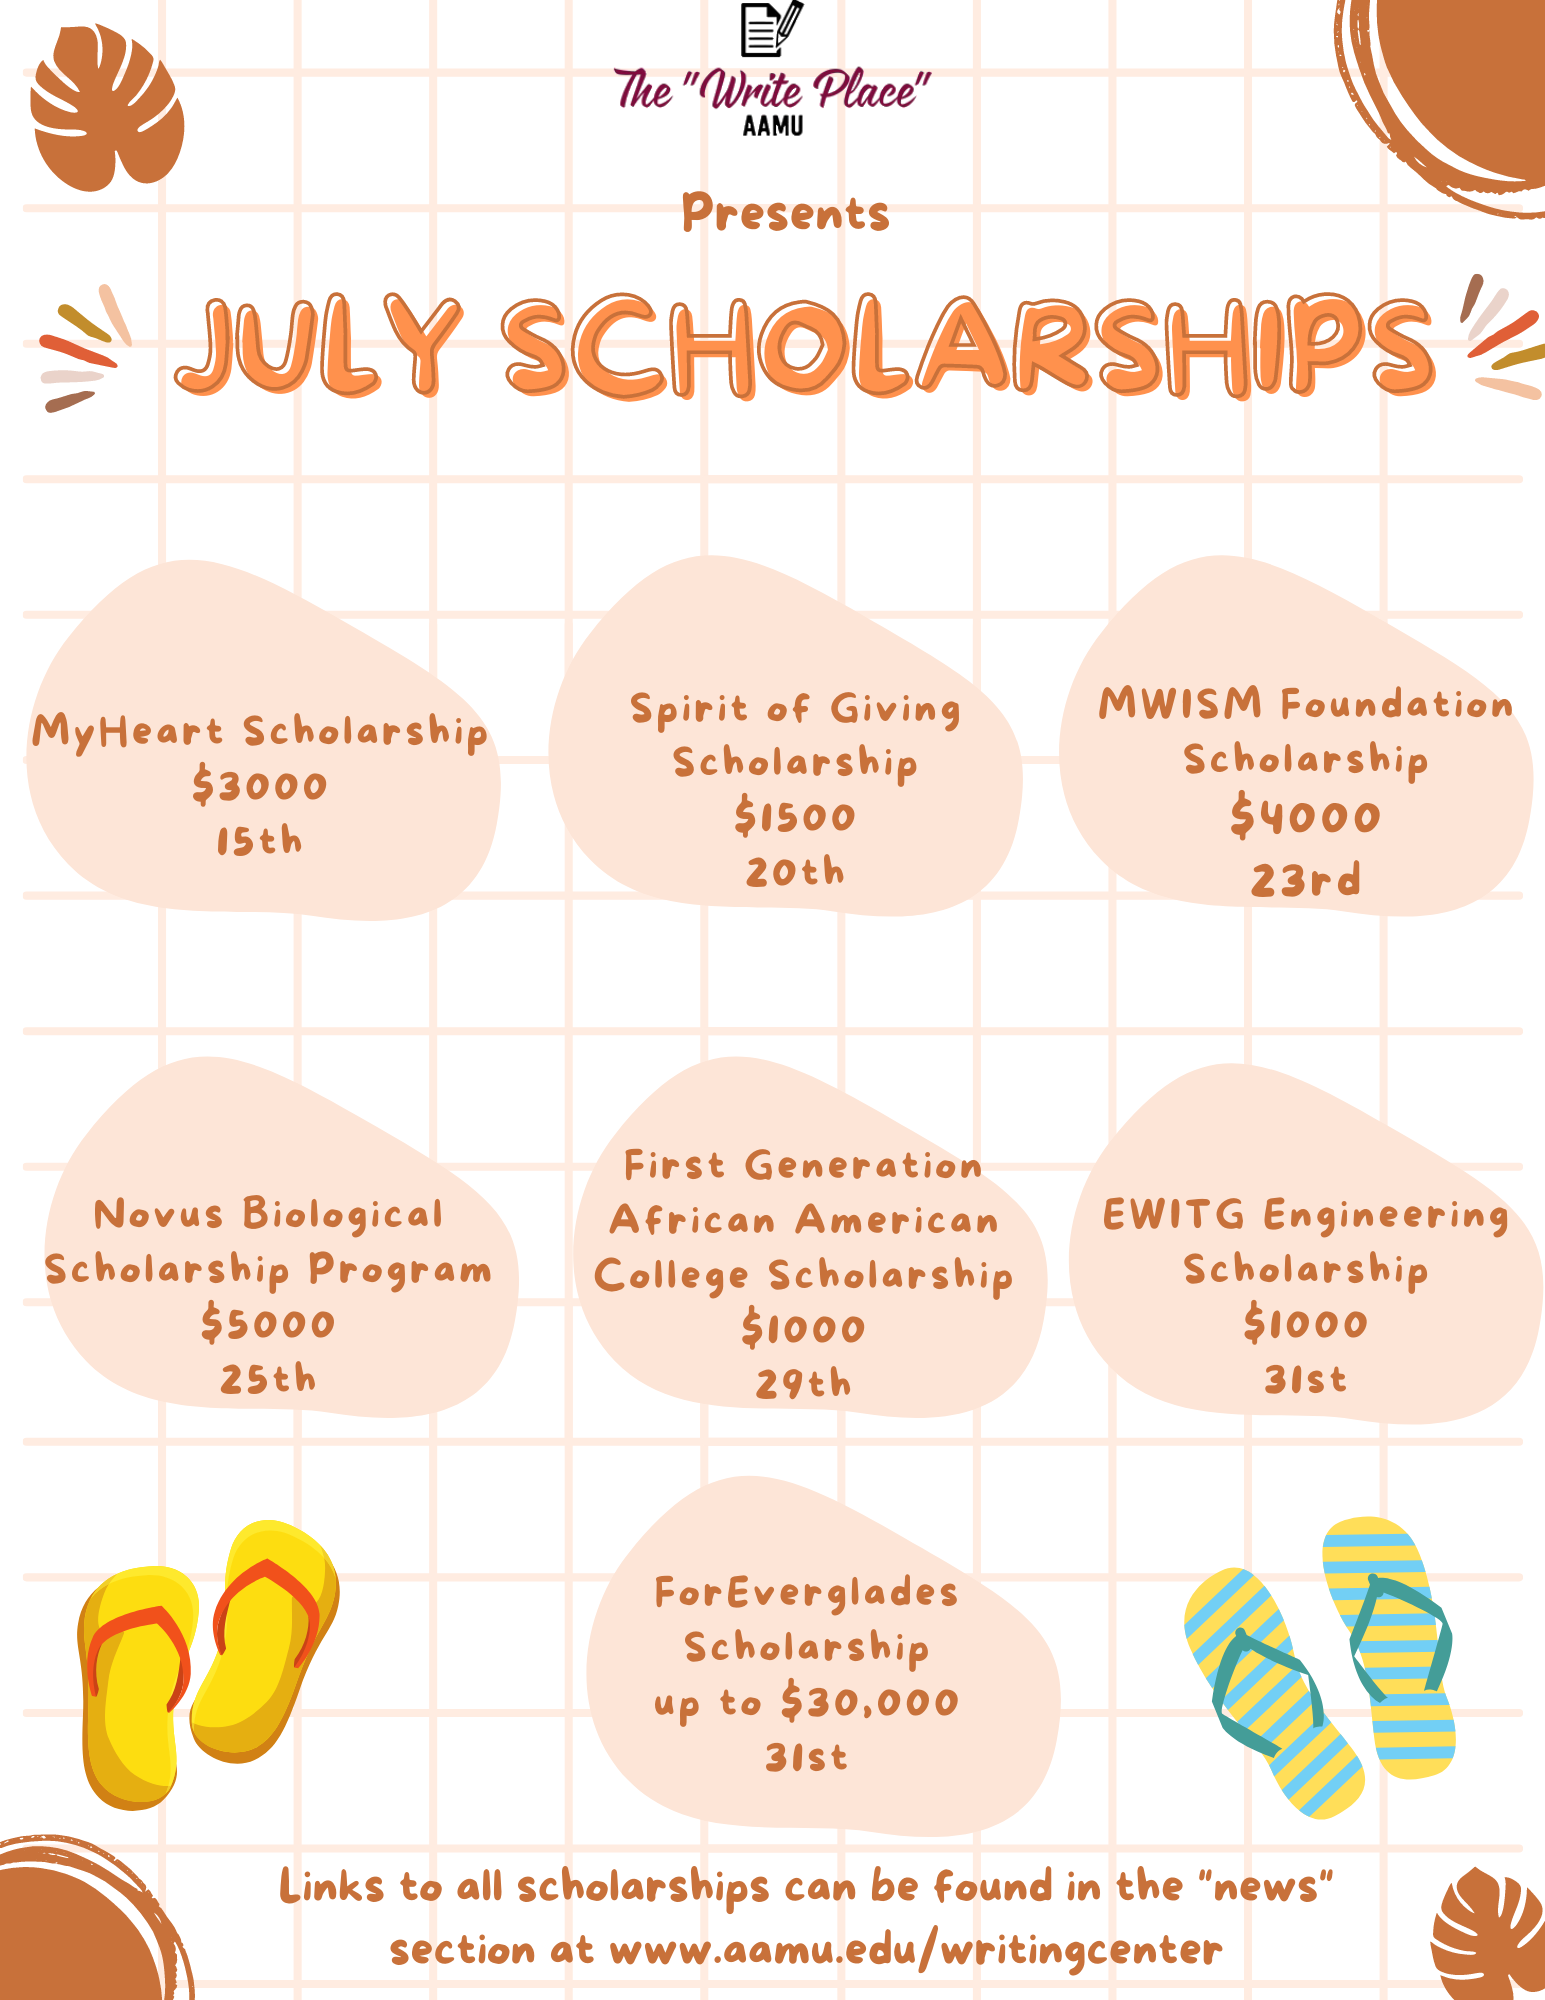 July Scholarships flyer